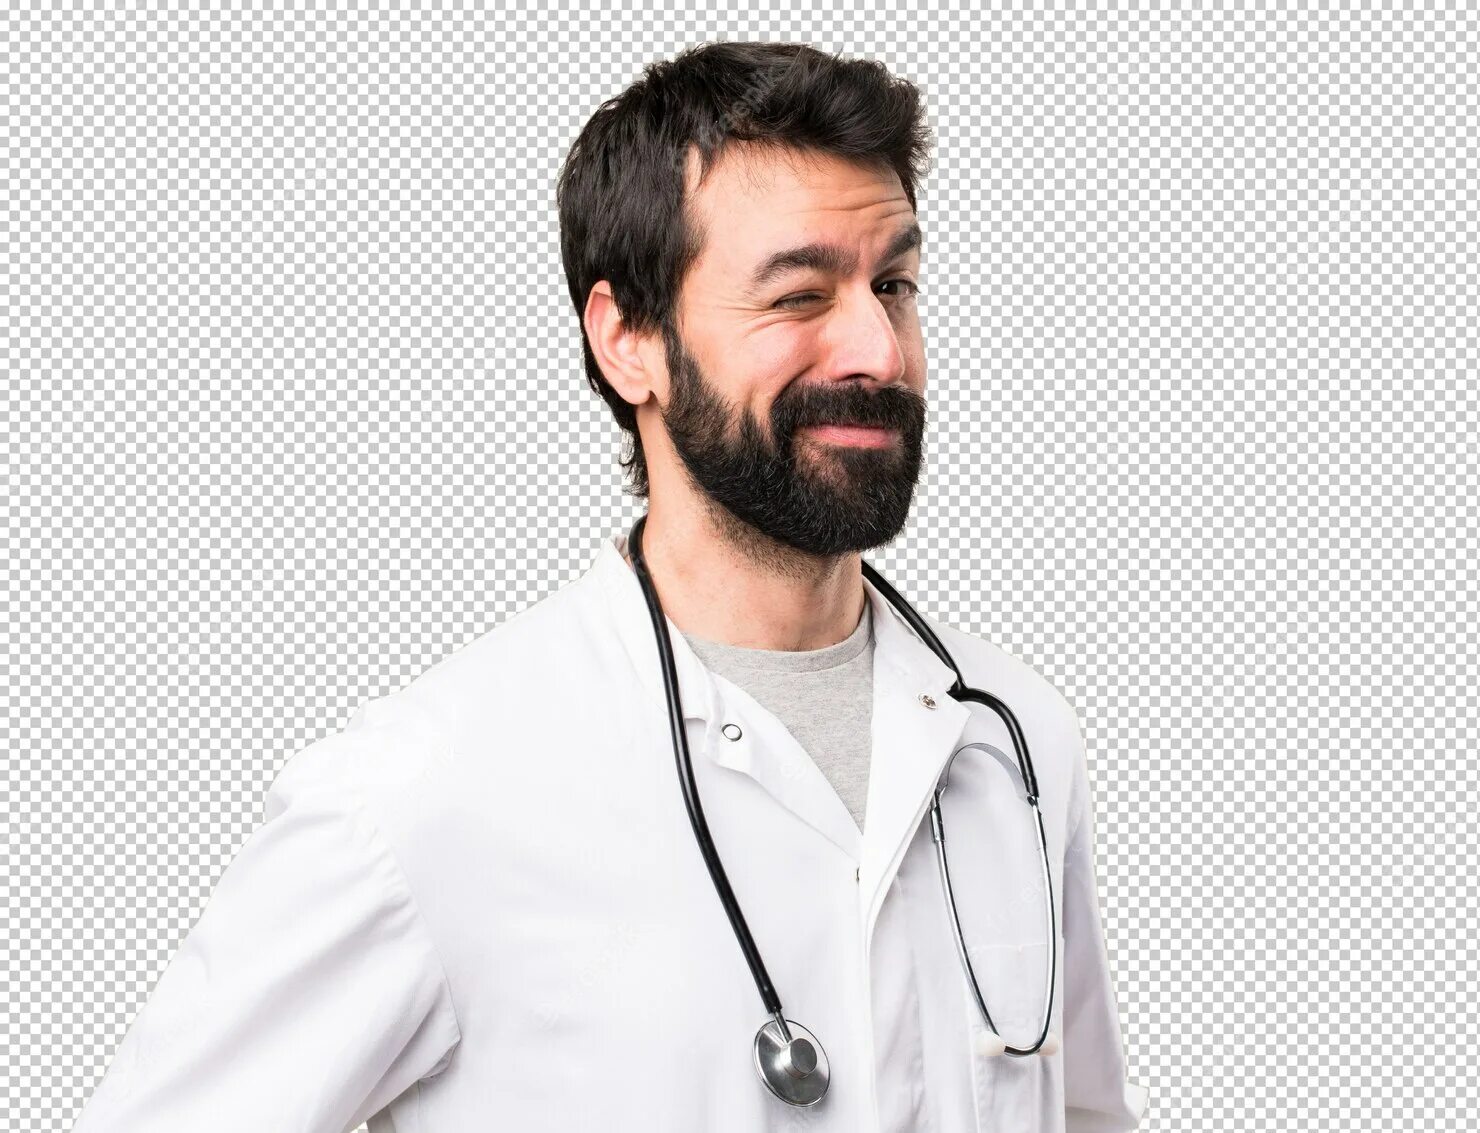 Молодой врач мужчина. Врач подмигивает. Подмигивающий врач мужчина. Доктор PSD. Врач фото на белом фоне.